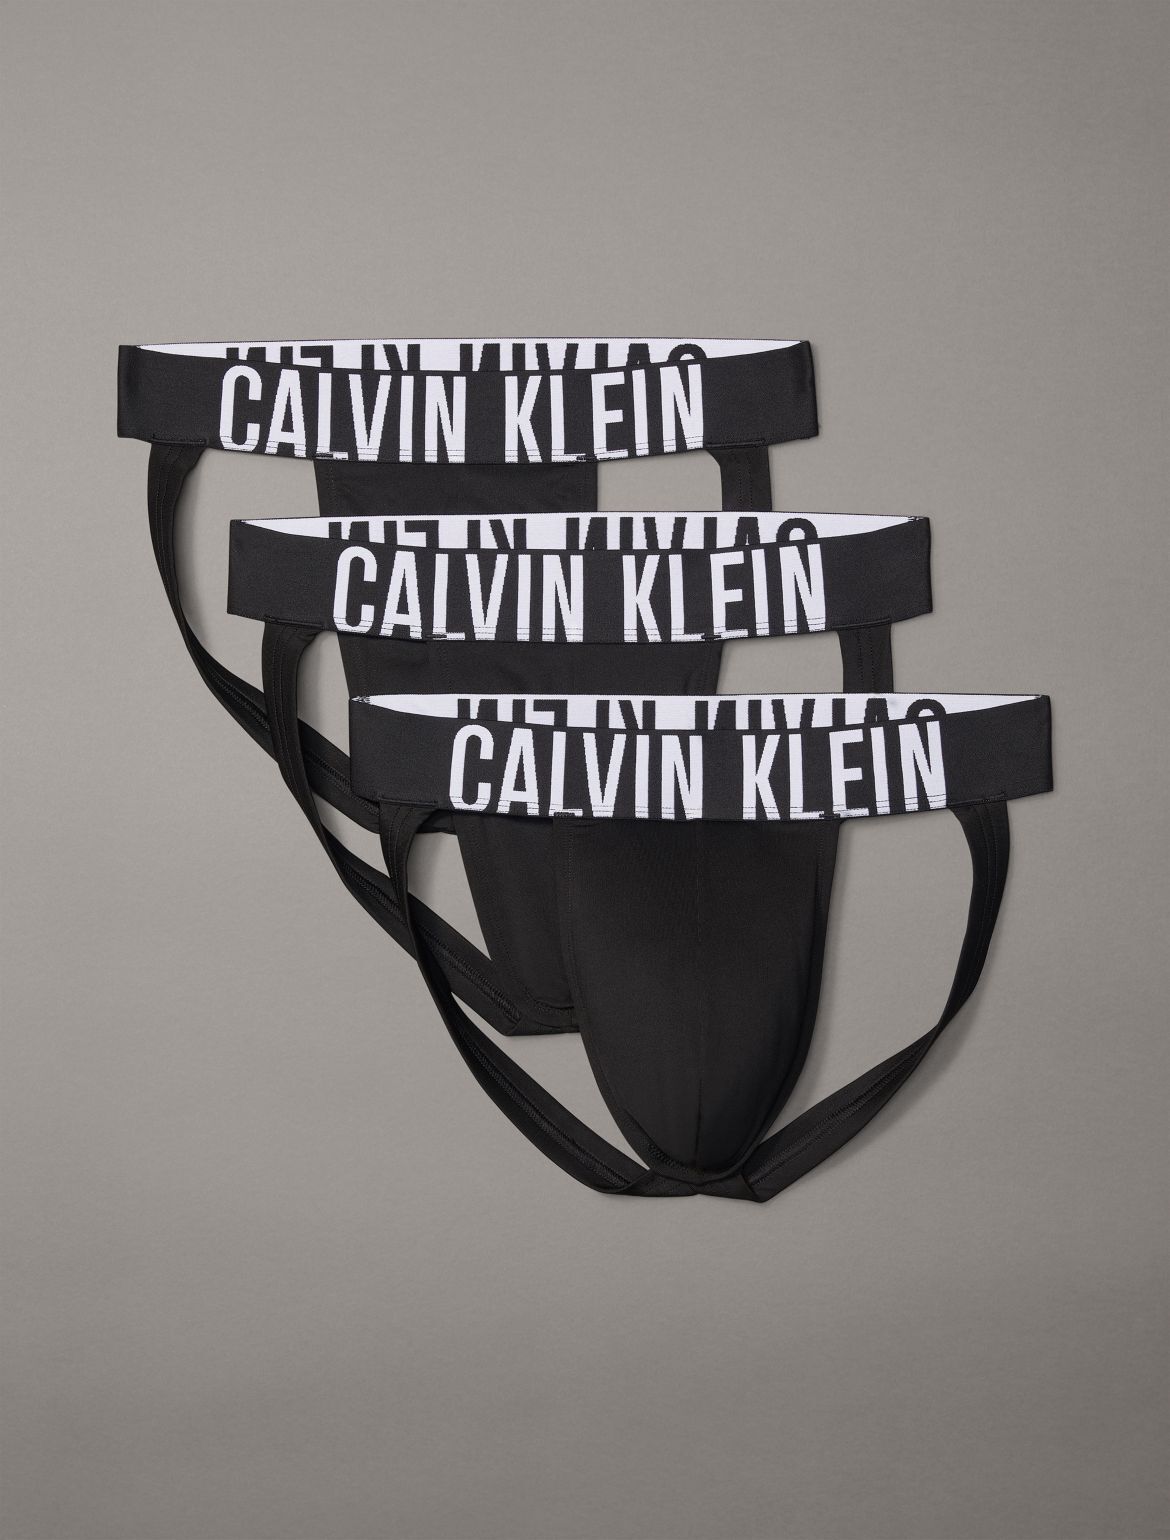 Calvin Klein Men's Intense Power Micro 3-Pack Jock Strap - Black - M